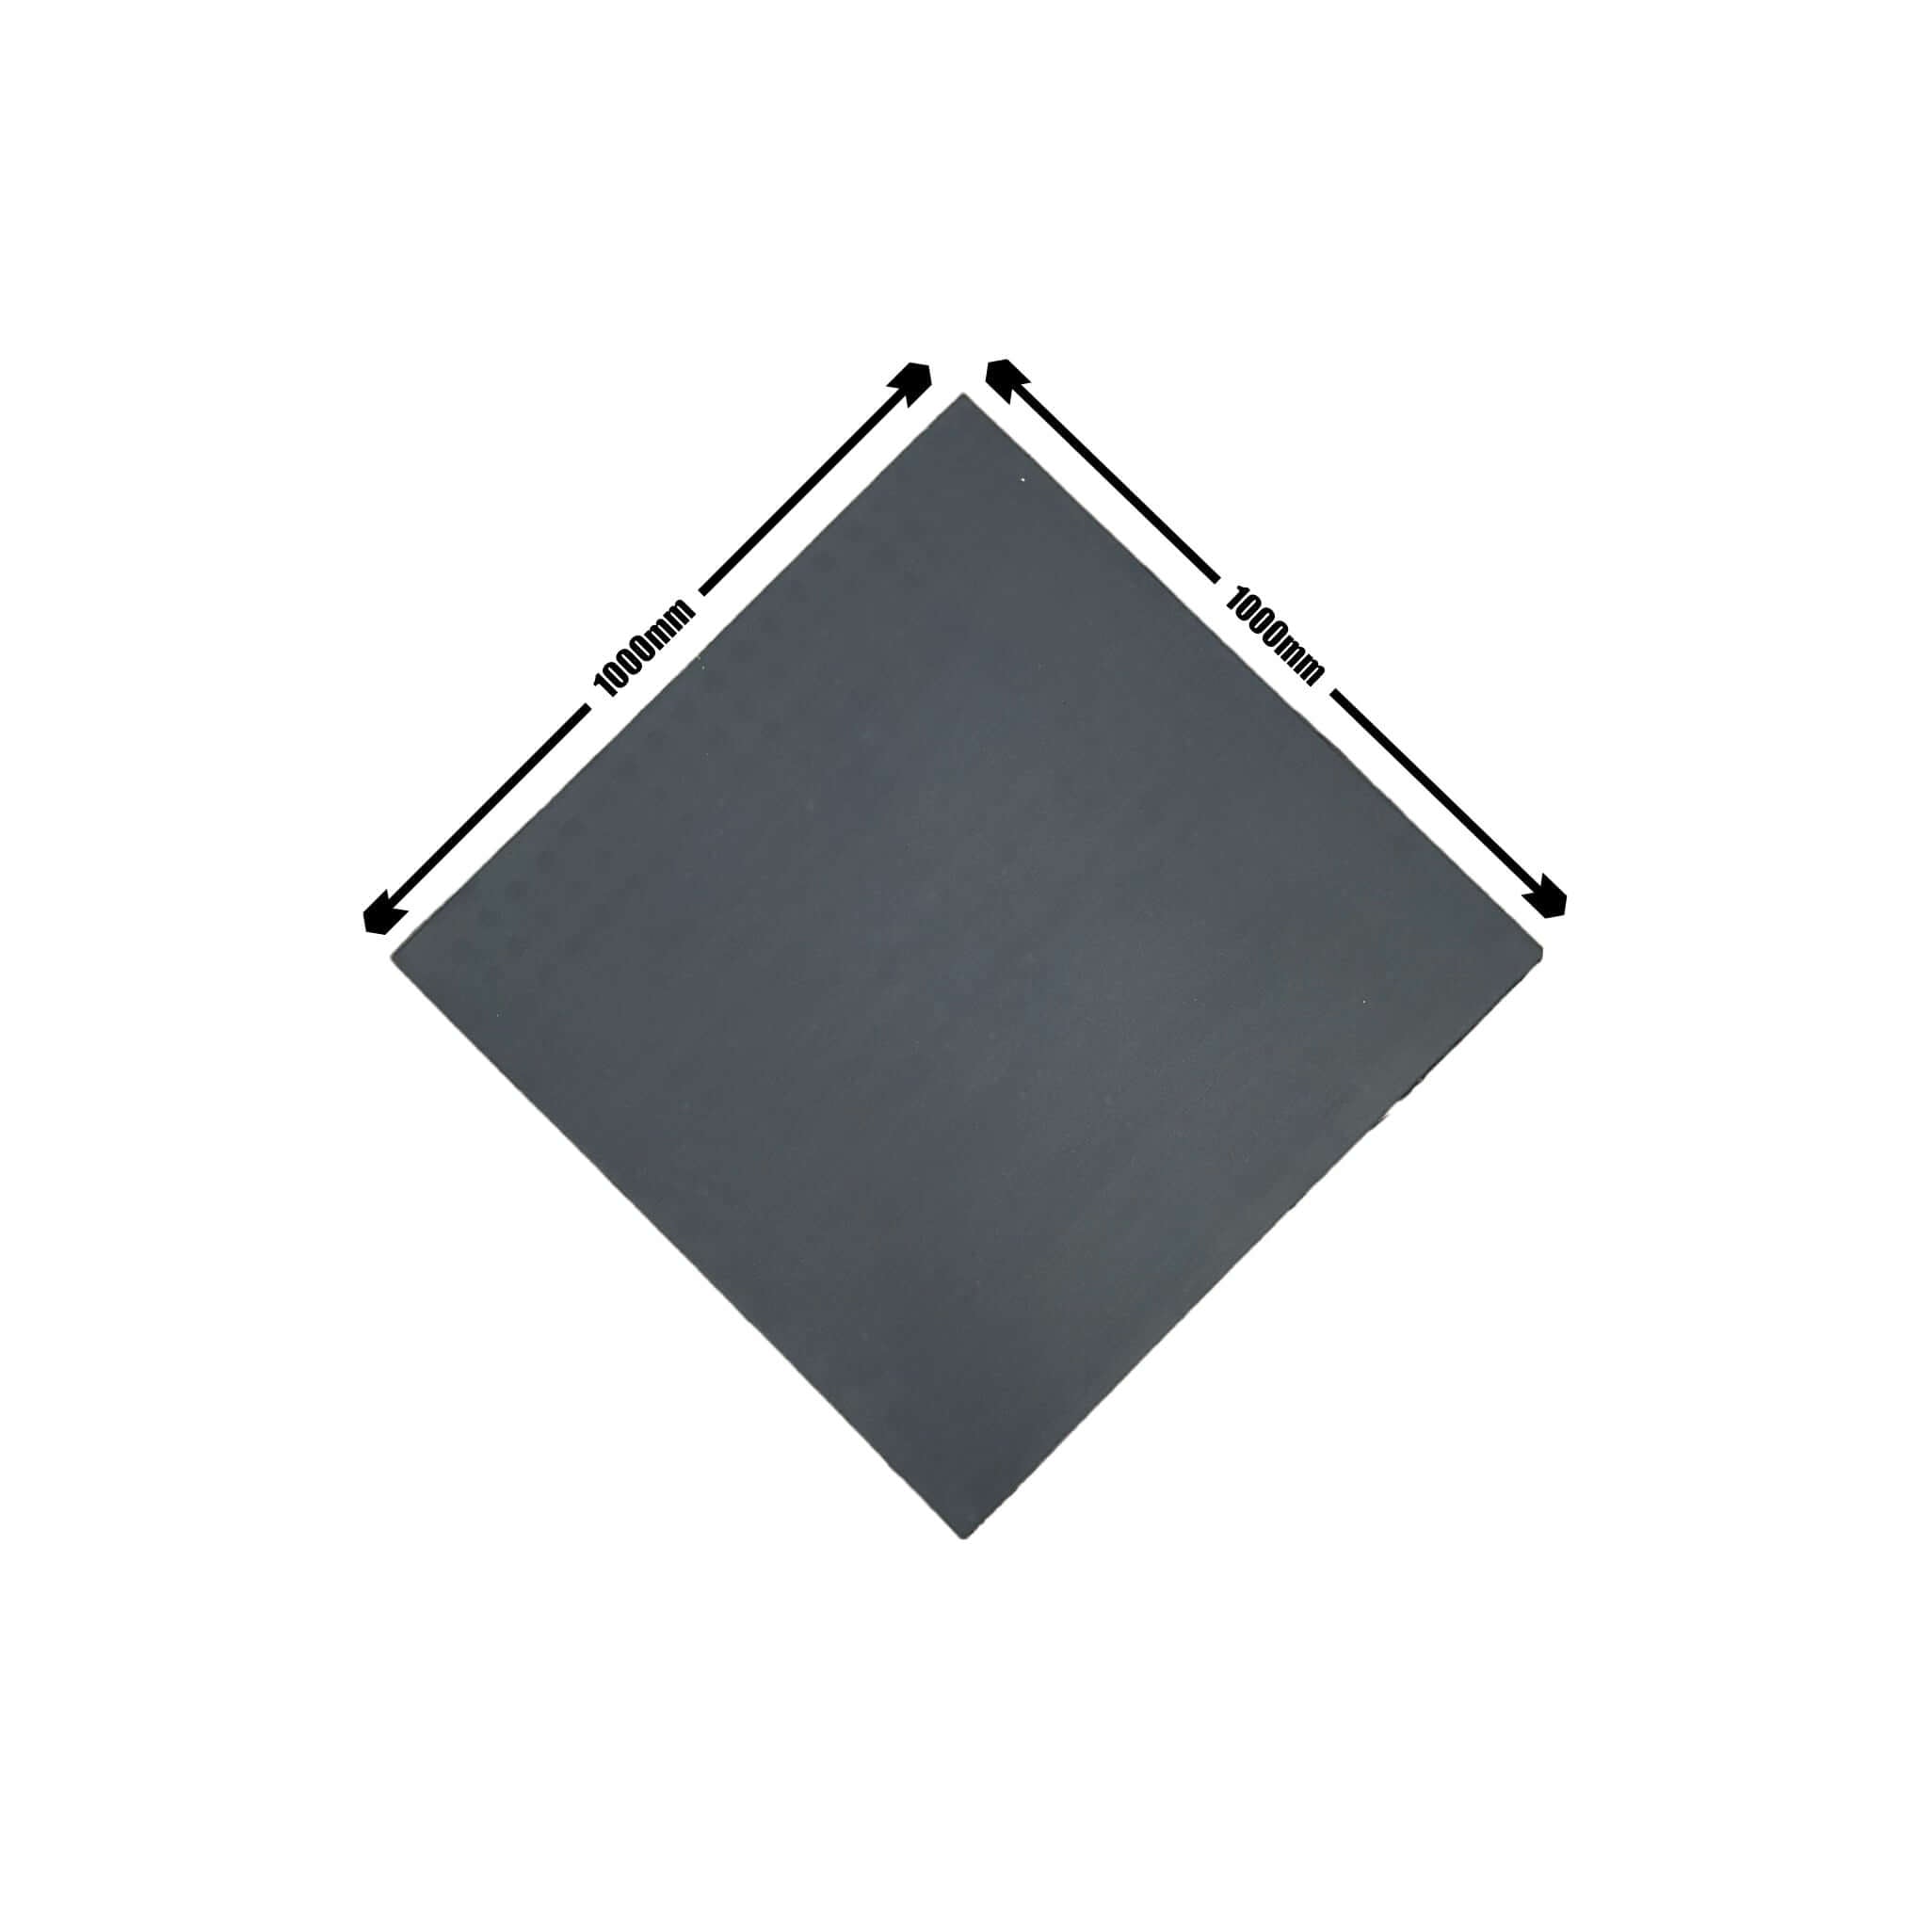 Pack of 100 - 30mm Rubber Gym Flooring Dual Density EPDM Rubber Dense Tile Mat 1m x 1m BLACK | INSOURCE